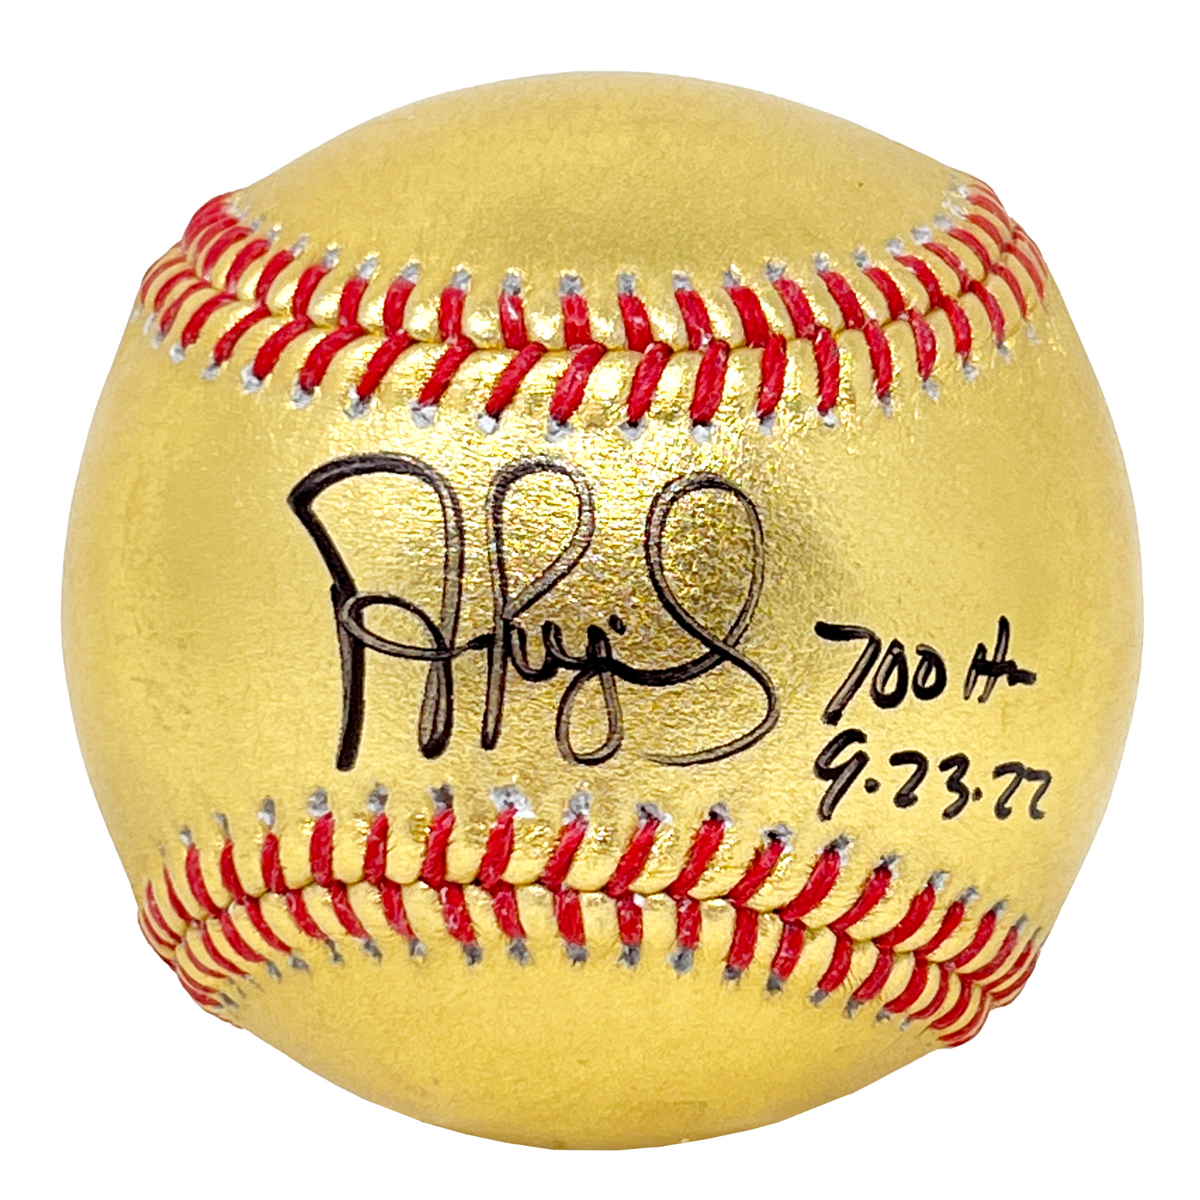 Albert Pujols 700 Home Runs Commemorative Patch – The Emblem Source